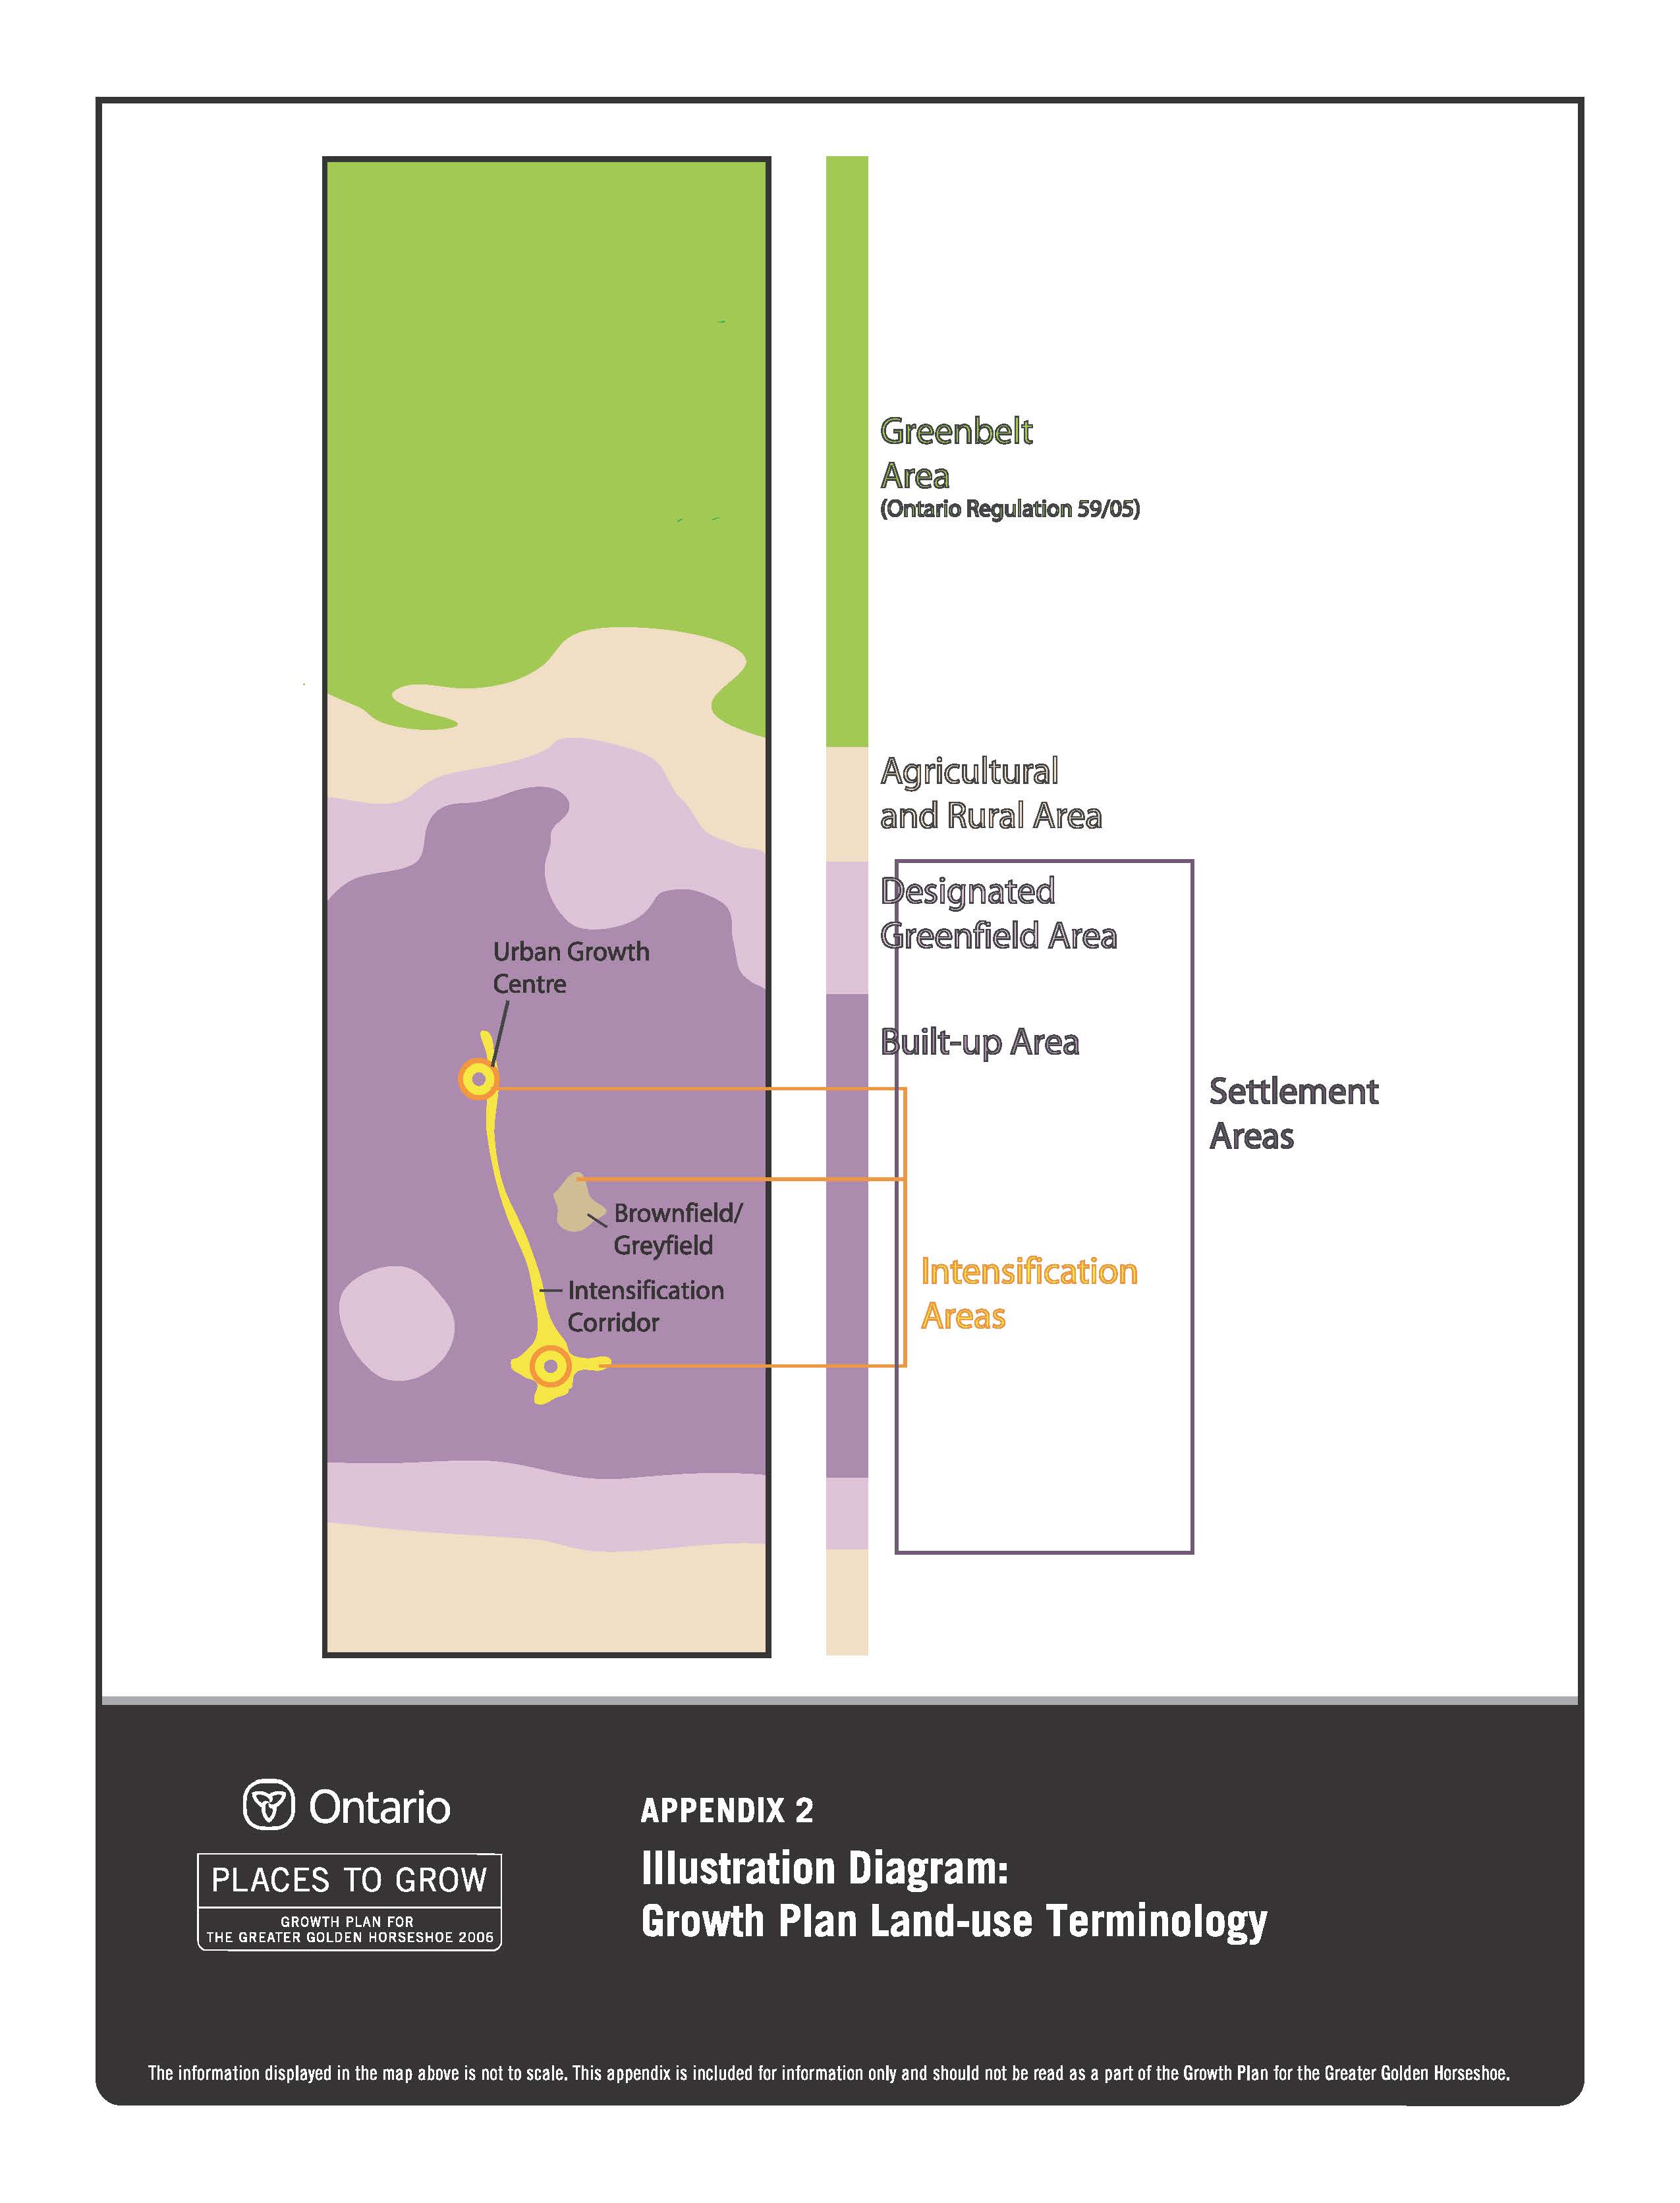 Appendix 2 - Illustration Diagram: Growth Plan Land-use Terminology